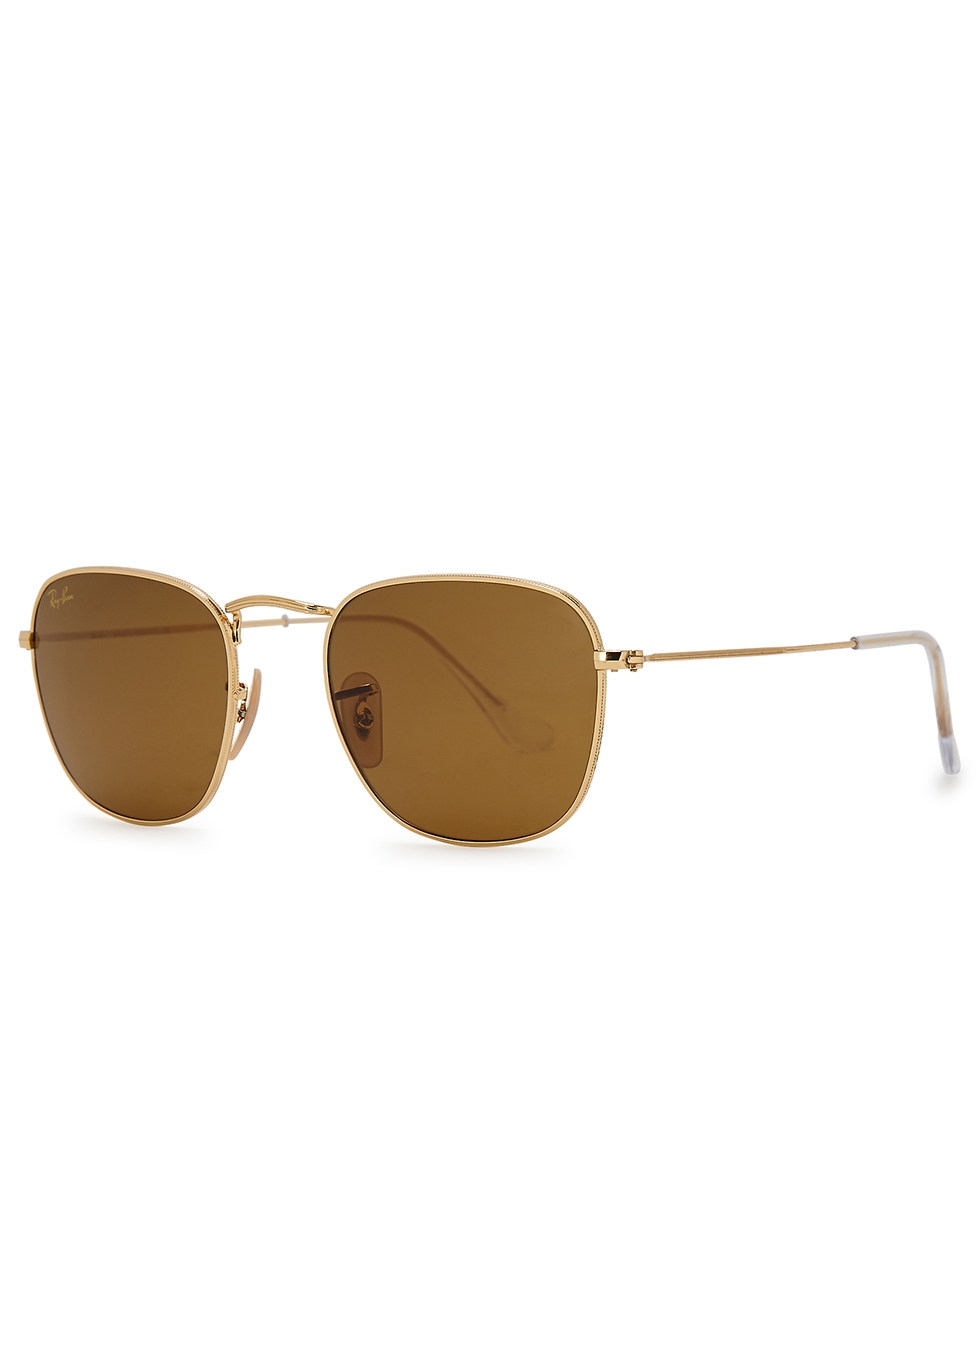 Ray-Ban Frank Legend G-15 oval-frame sunglasses - Harvey Nichols